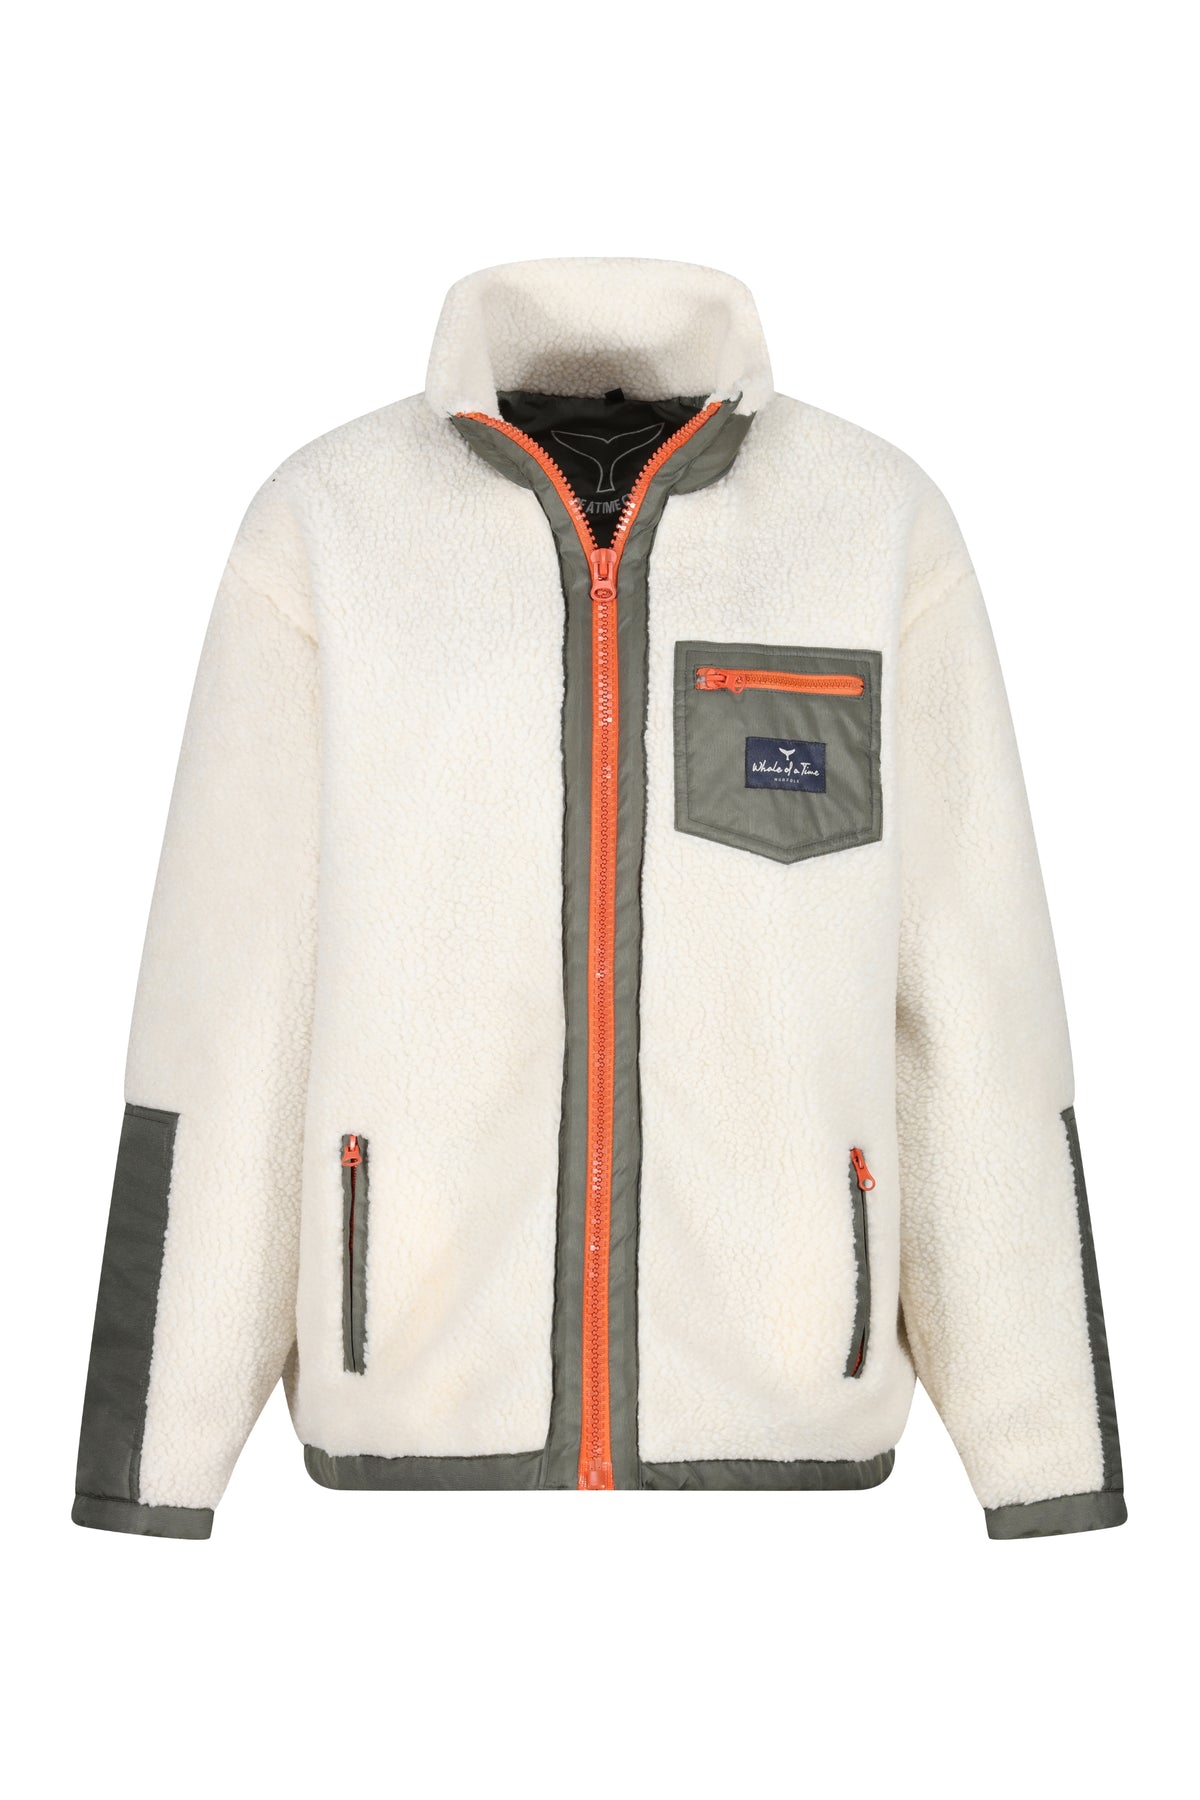 Highland Unisex Sherpa Jacket - Cream - Whale Of A Time Clothing